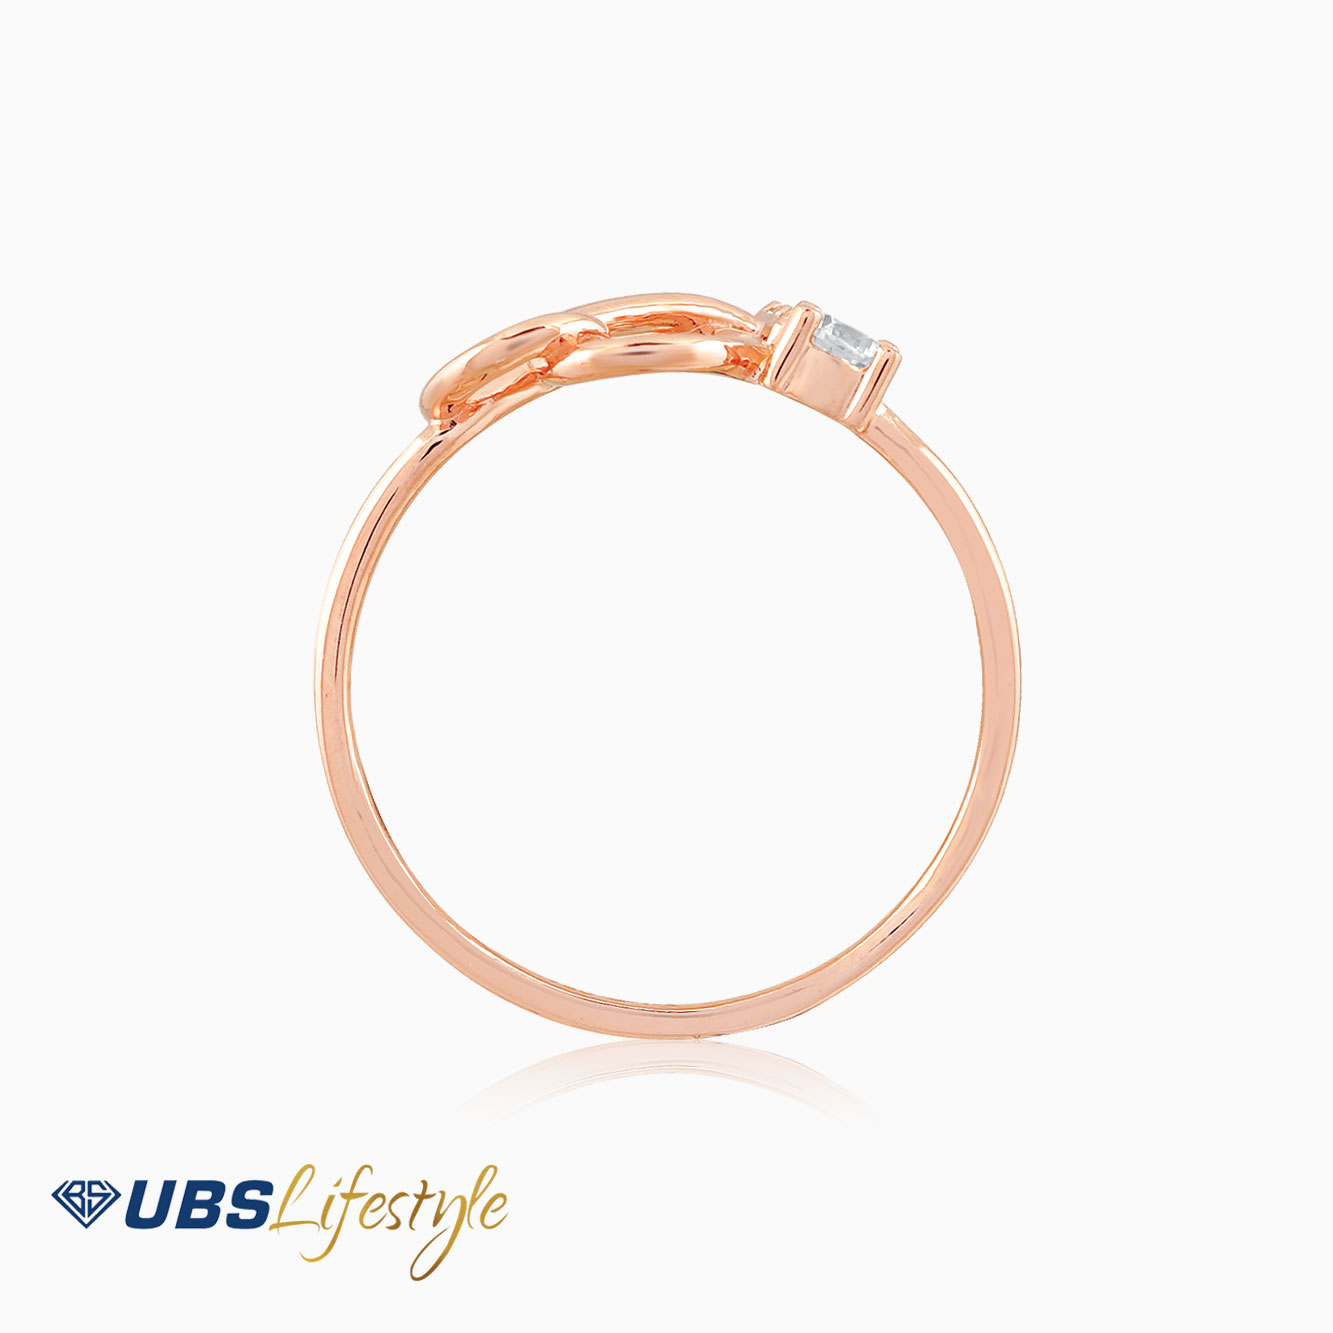 UBS Cincin Emas - CC16019R - 17K